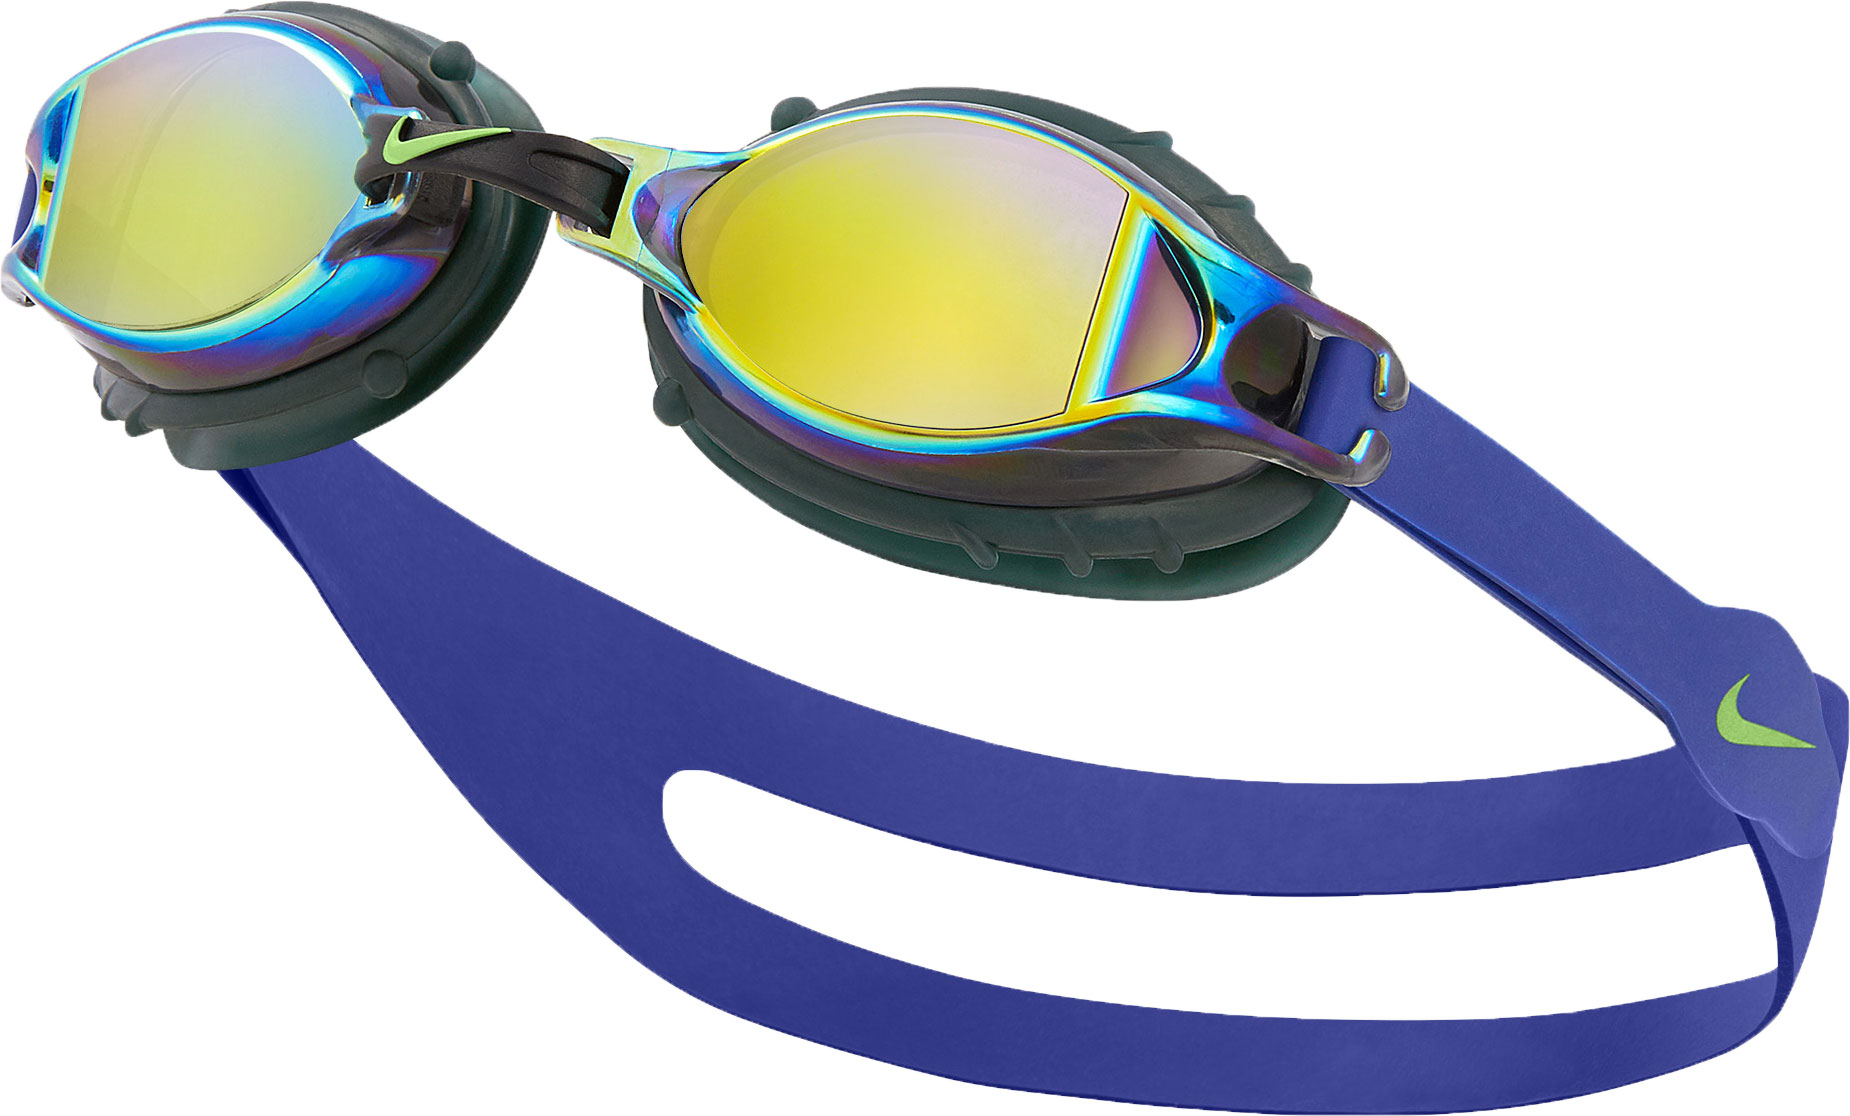 Children's swimming goggles